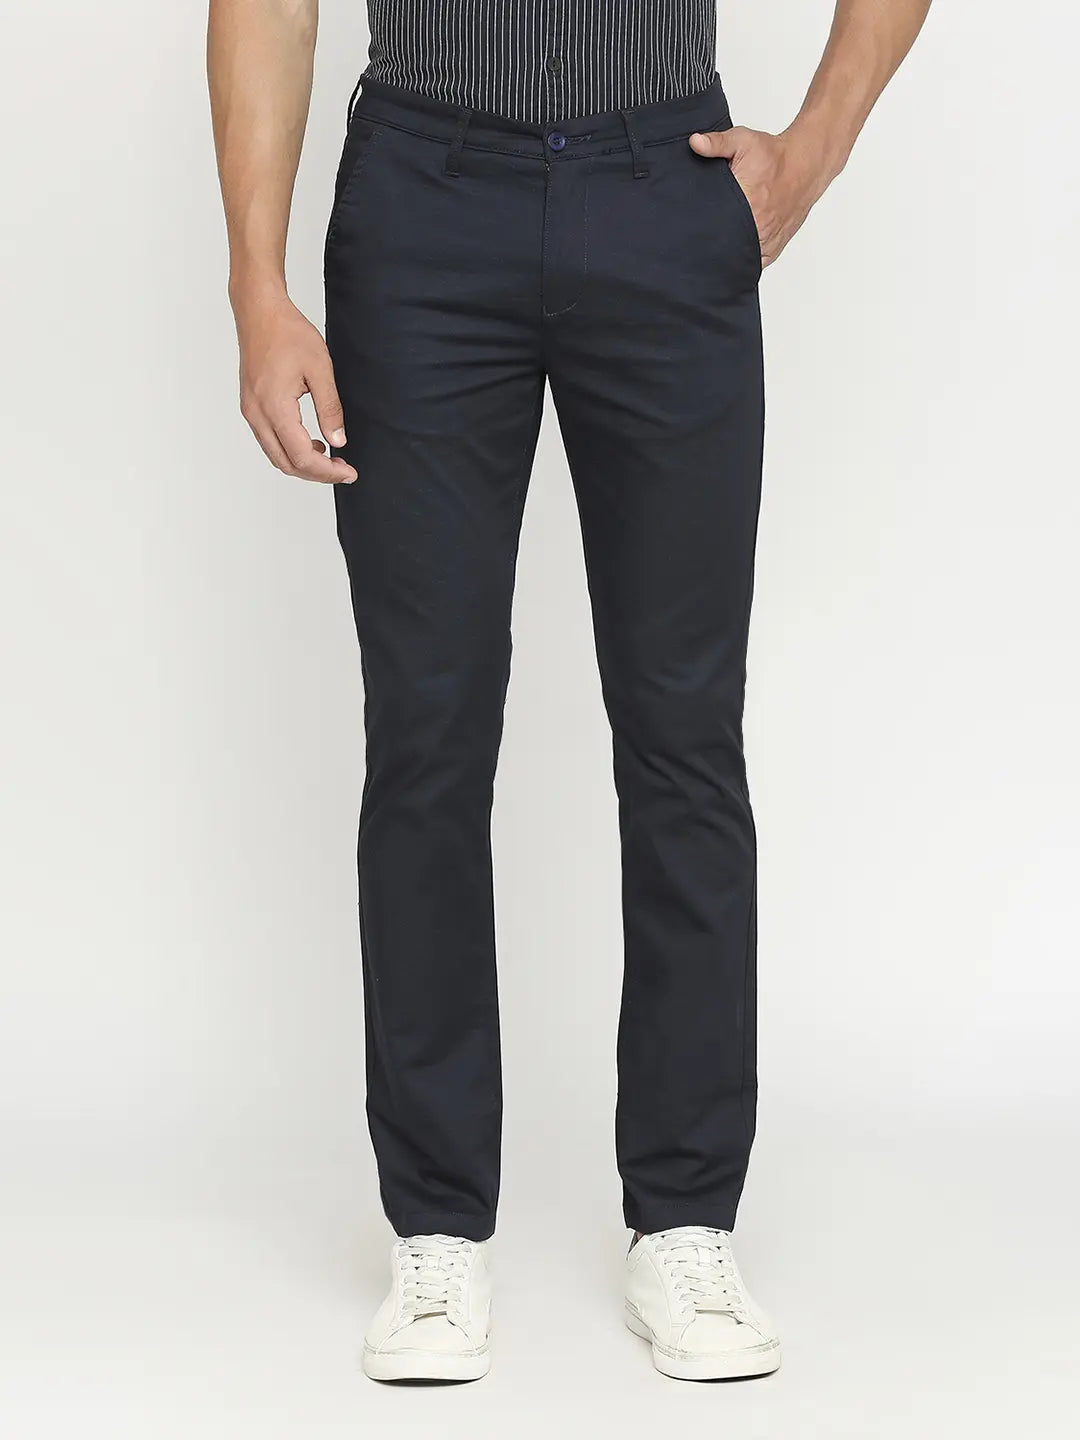 Buy Online Spykar Men Navy Blue Cotton Slim Fit Ankle Length Trouser